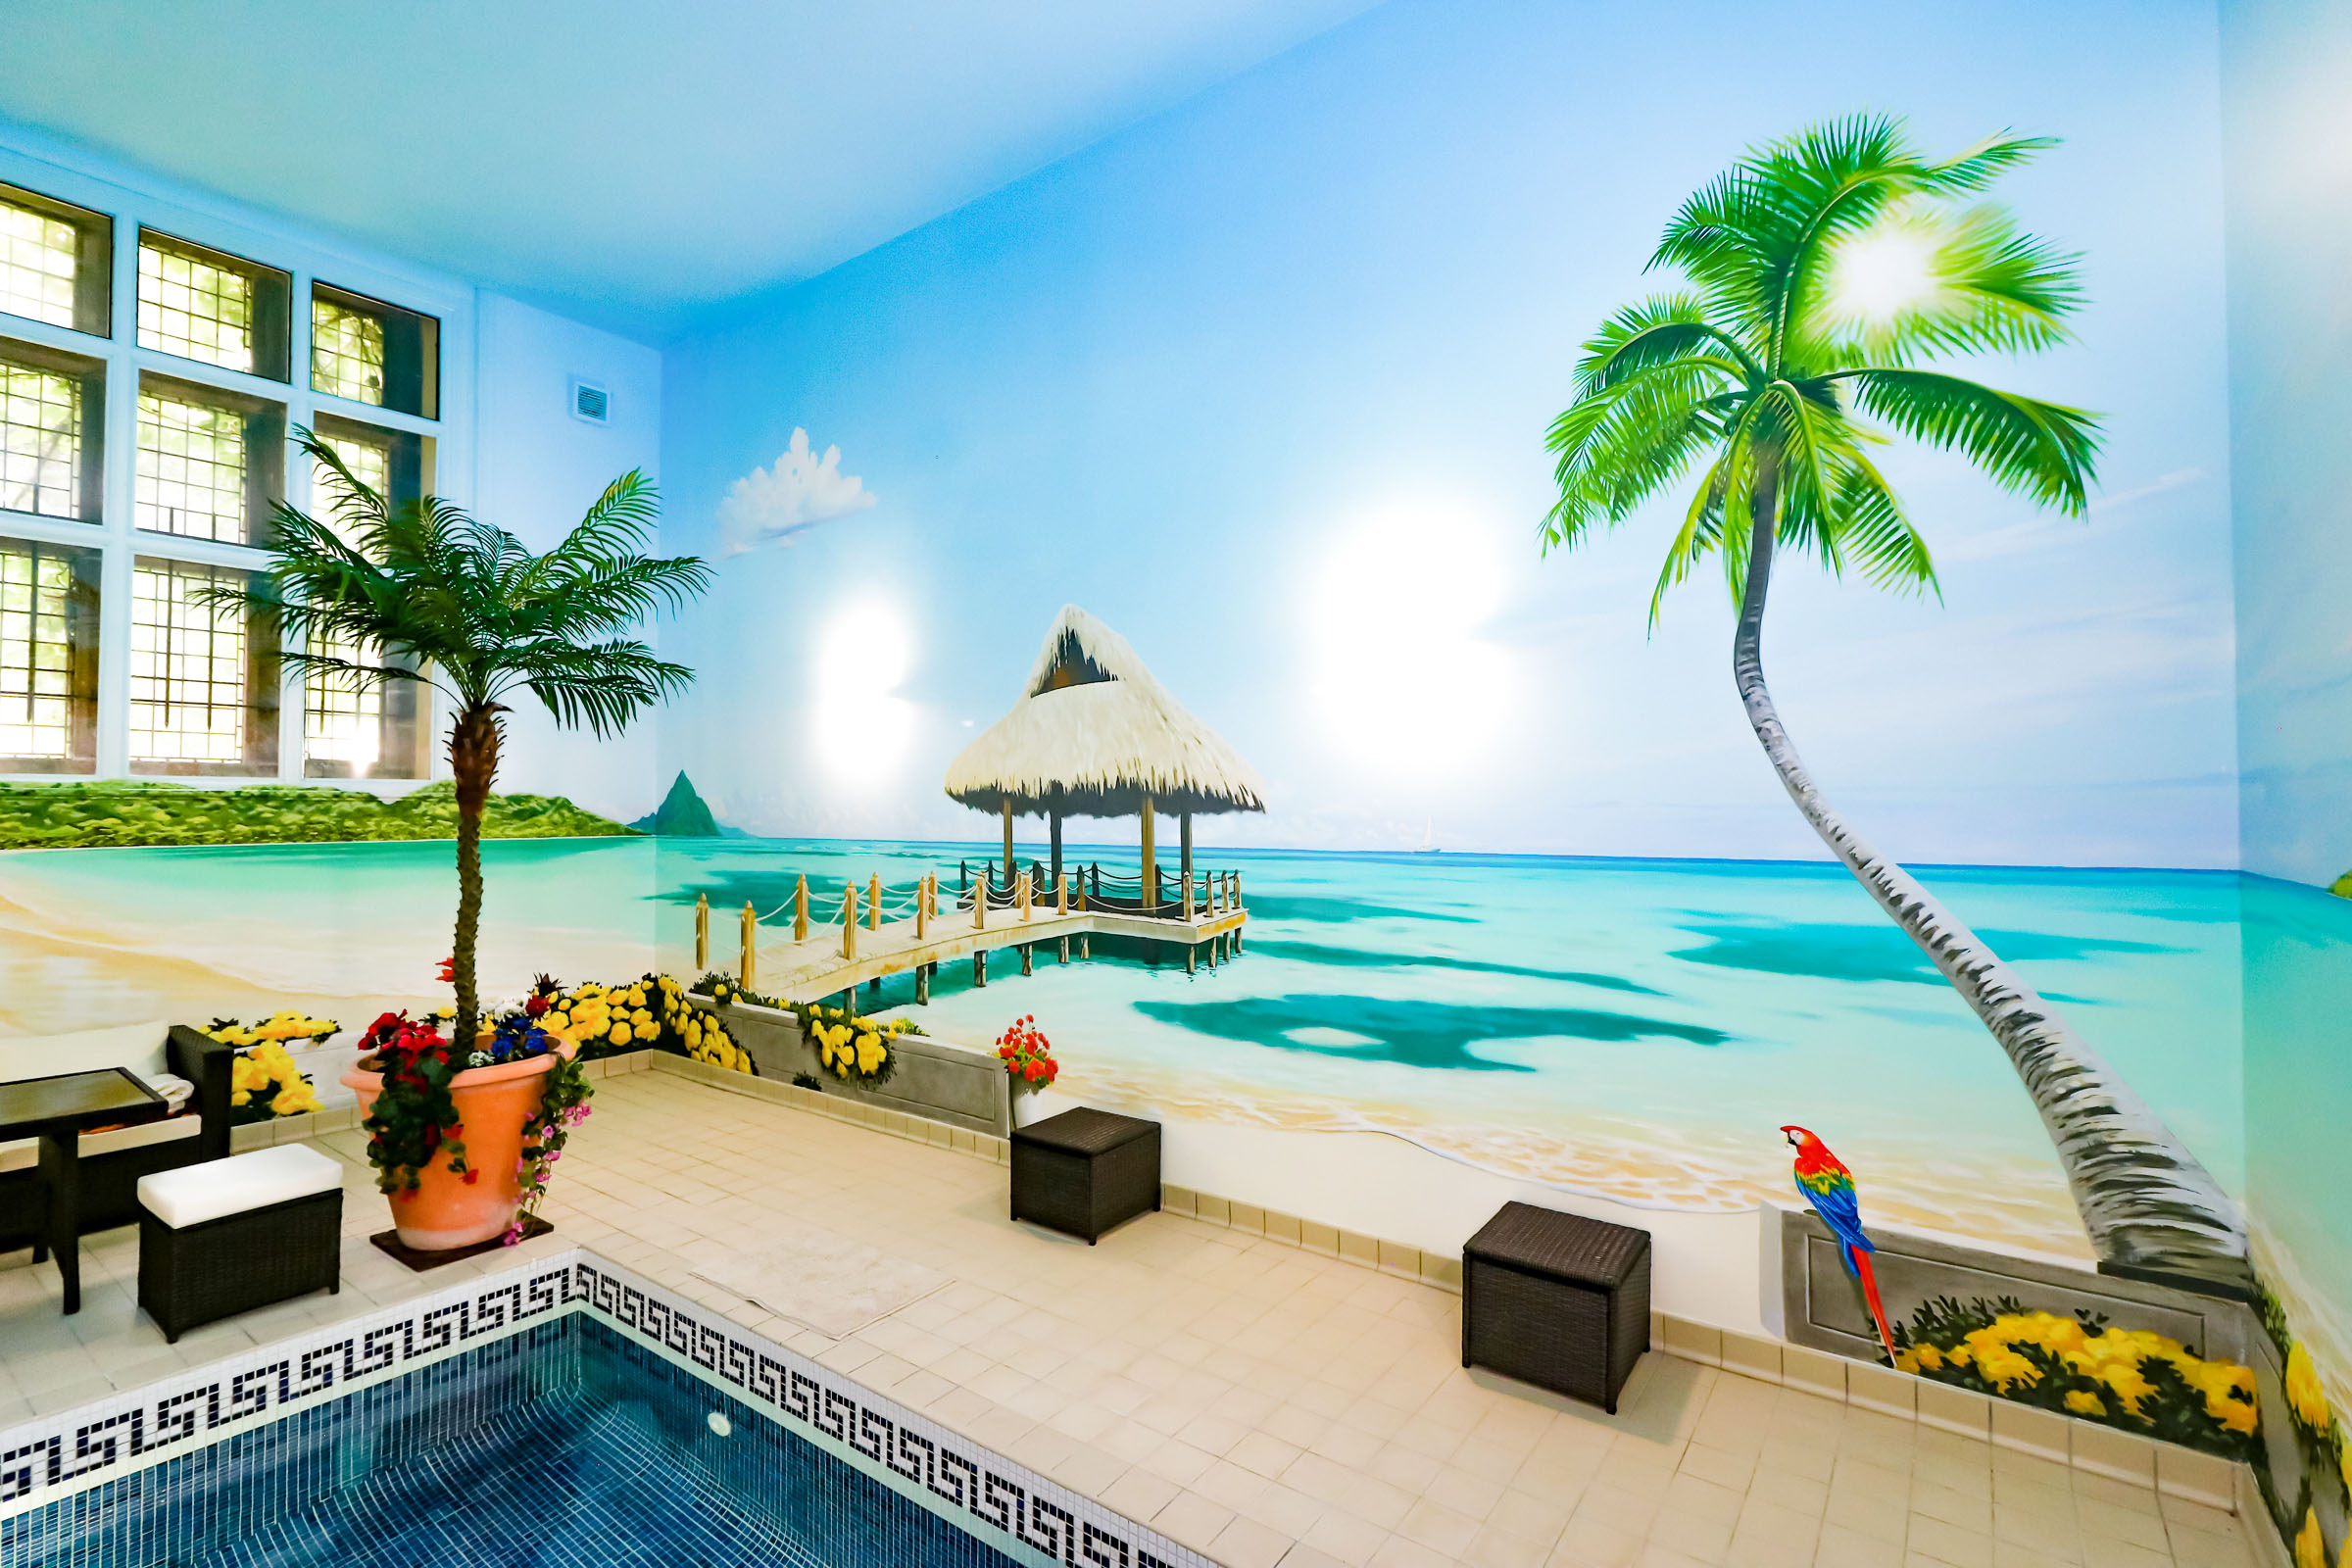 Caribbean Islands Mural around private indoor swimming pool in the UK